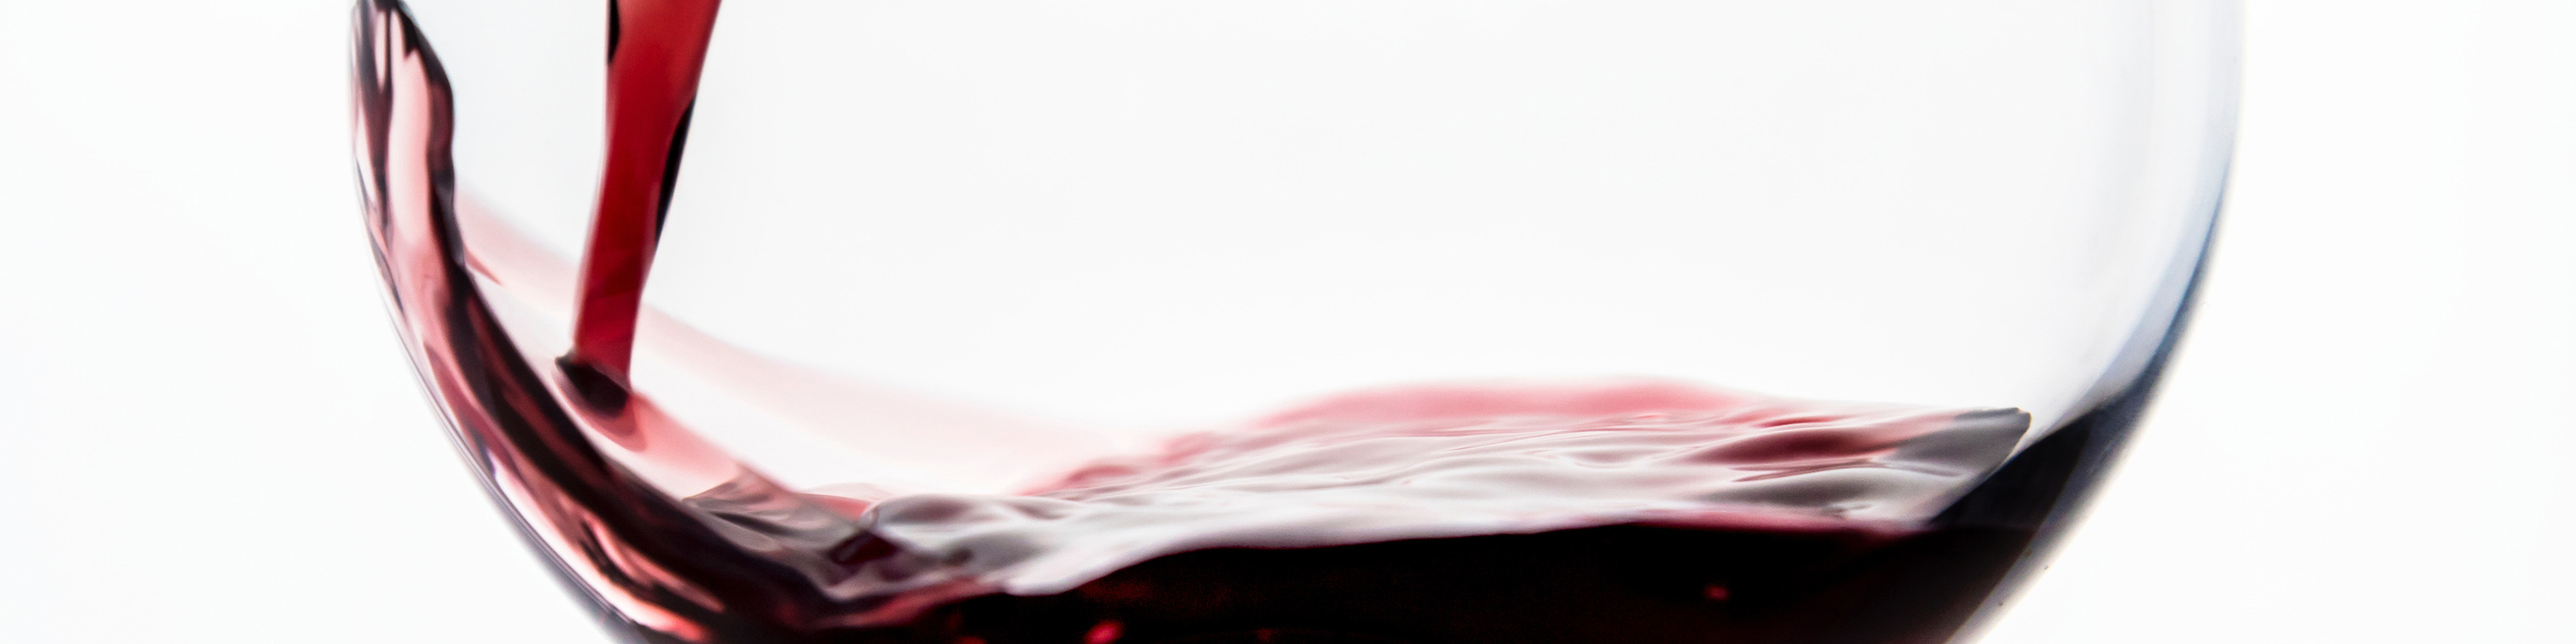 Sensorik-Lizenz Wein